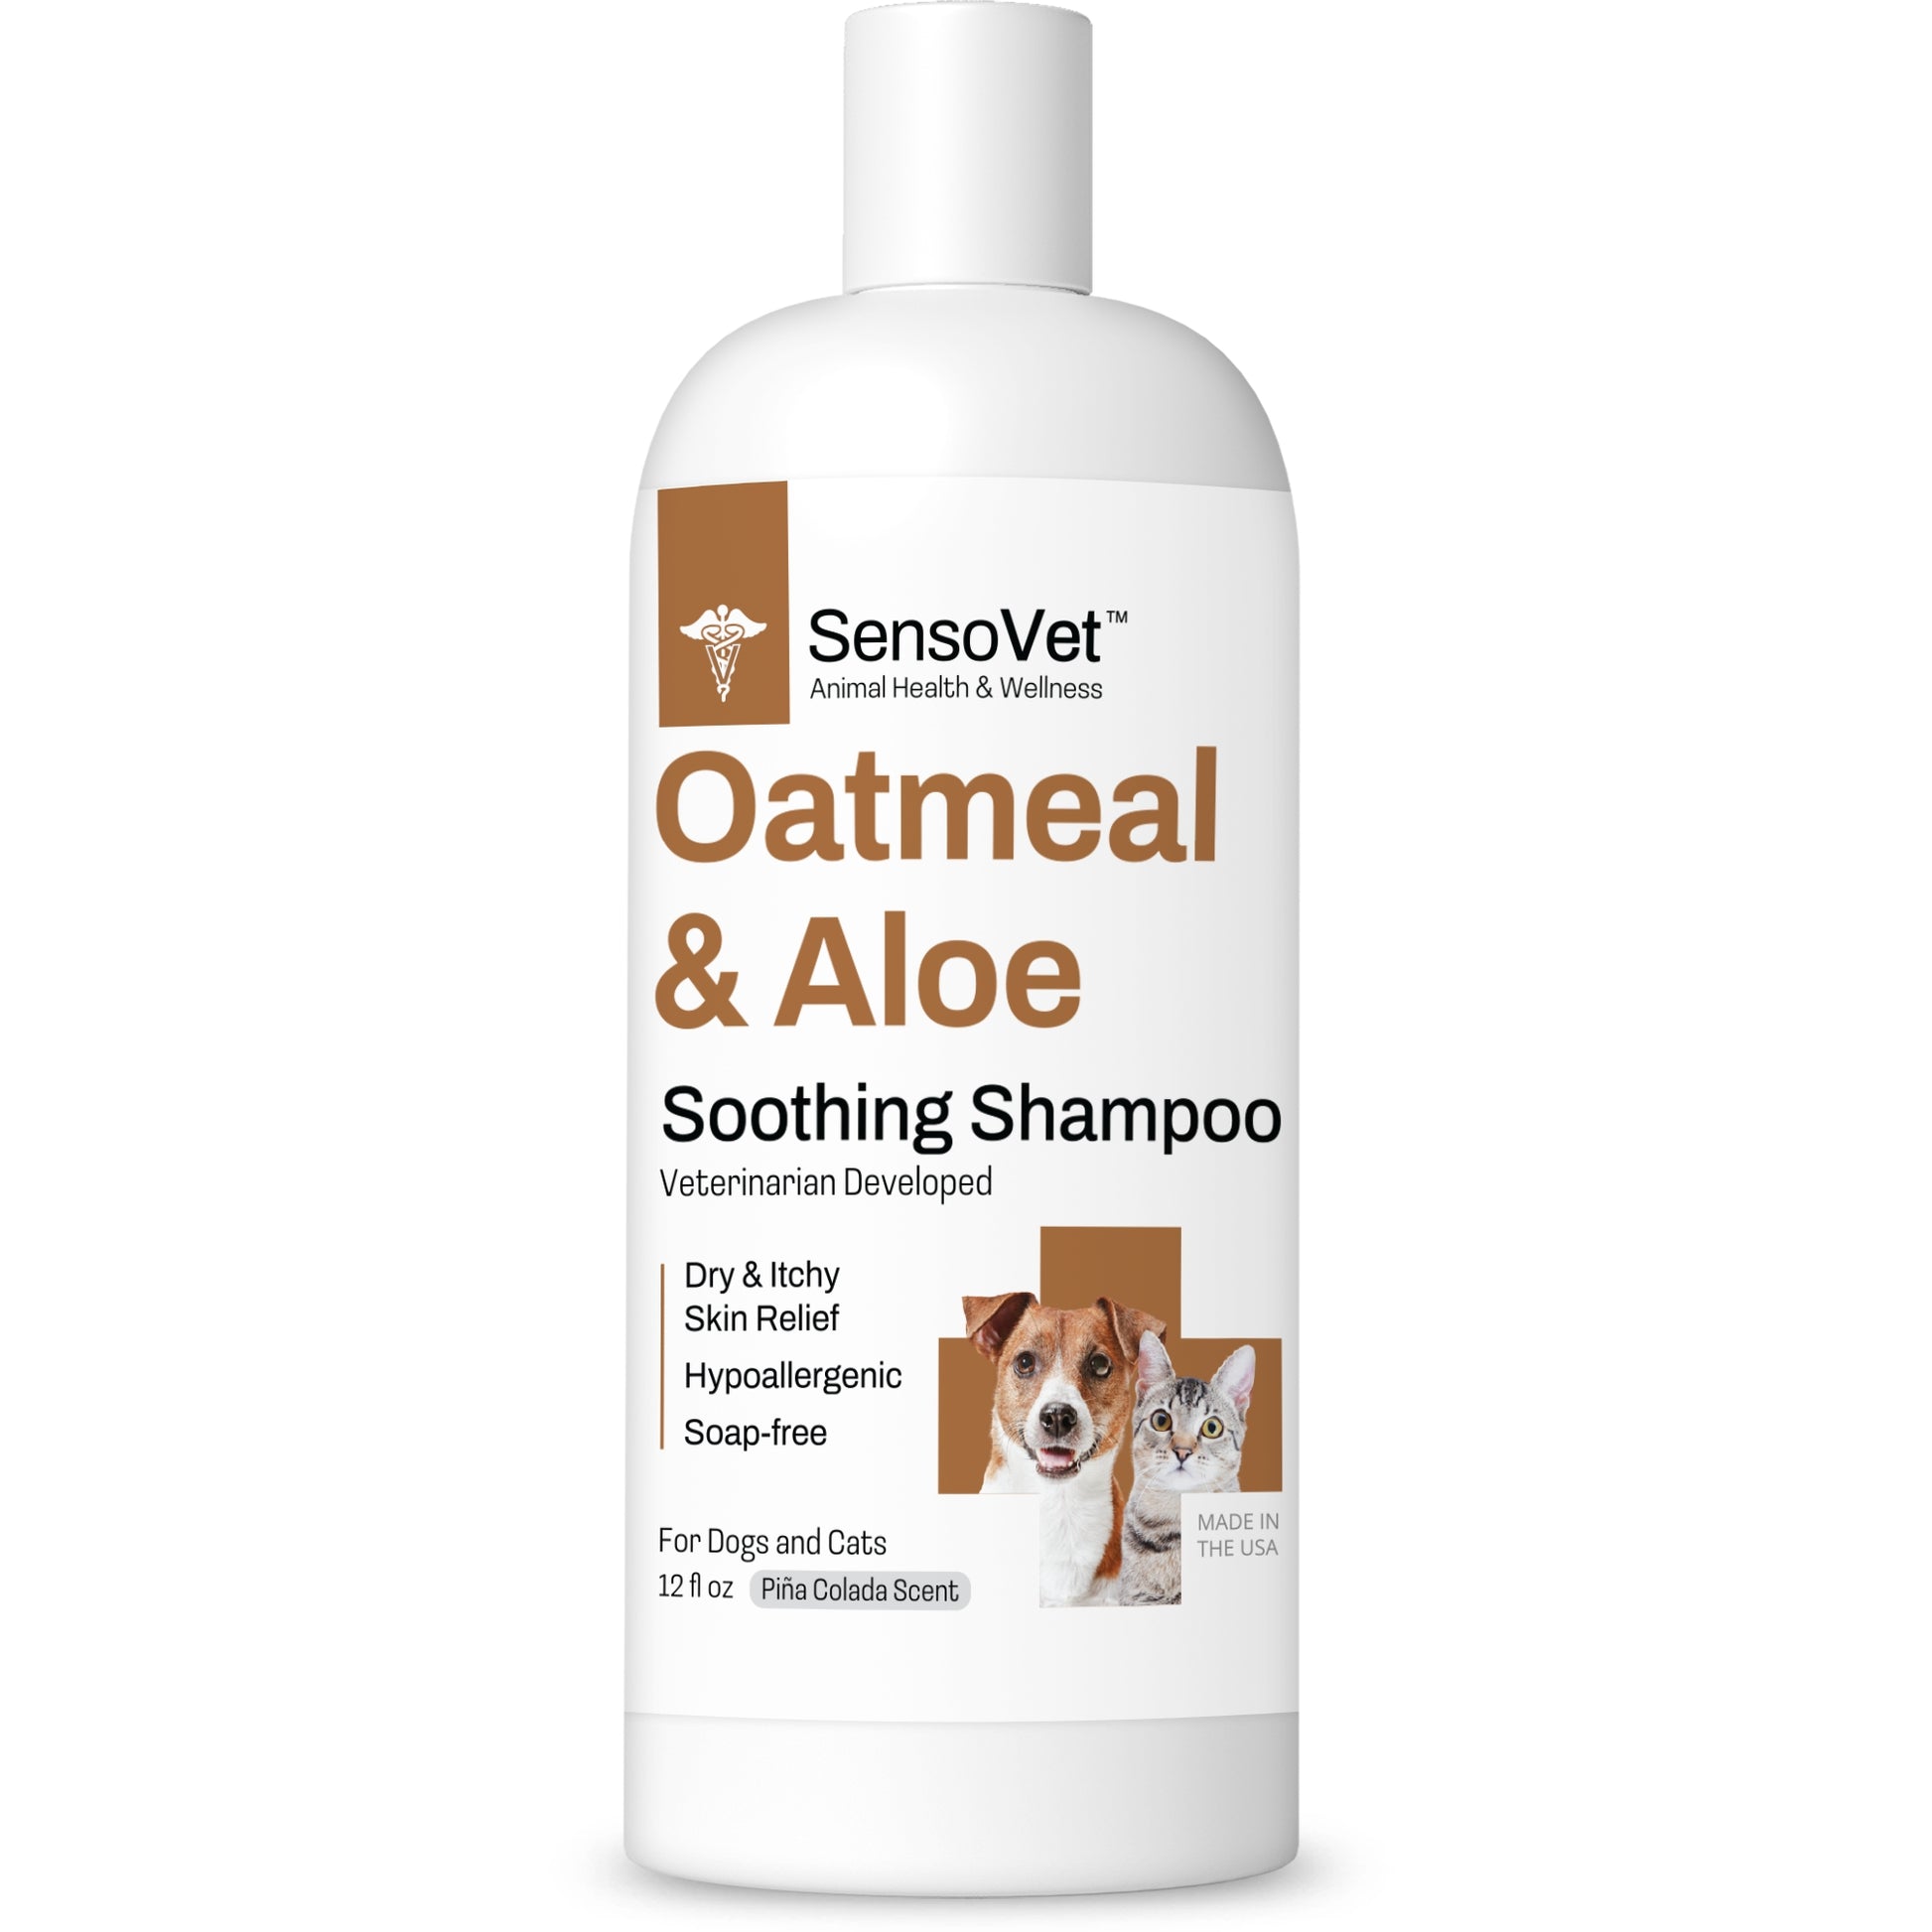 sensovet oatmeal and aloe shampoo for dogs and cats